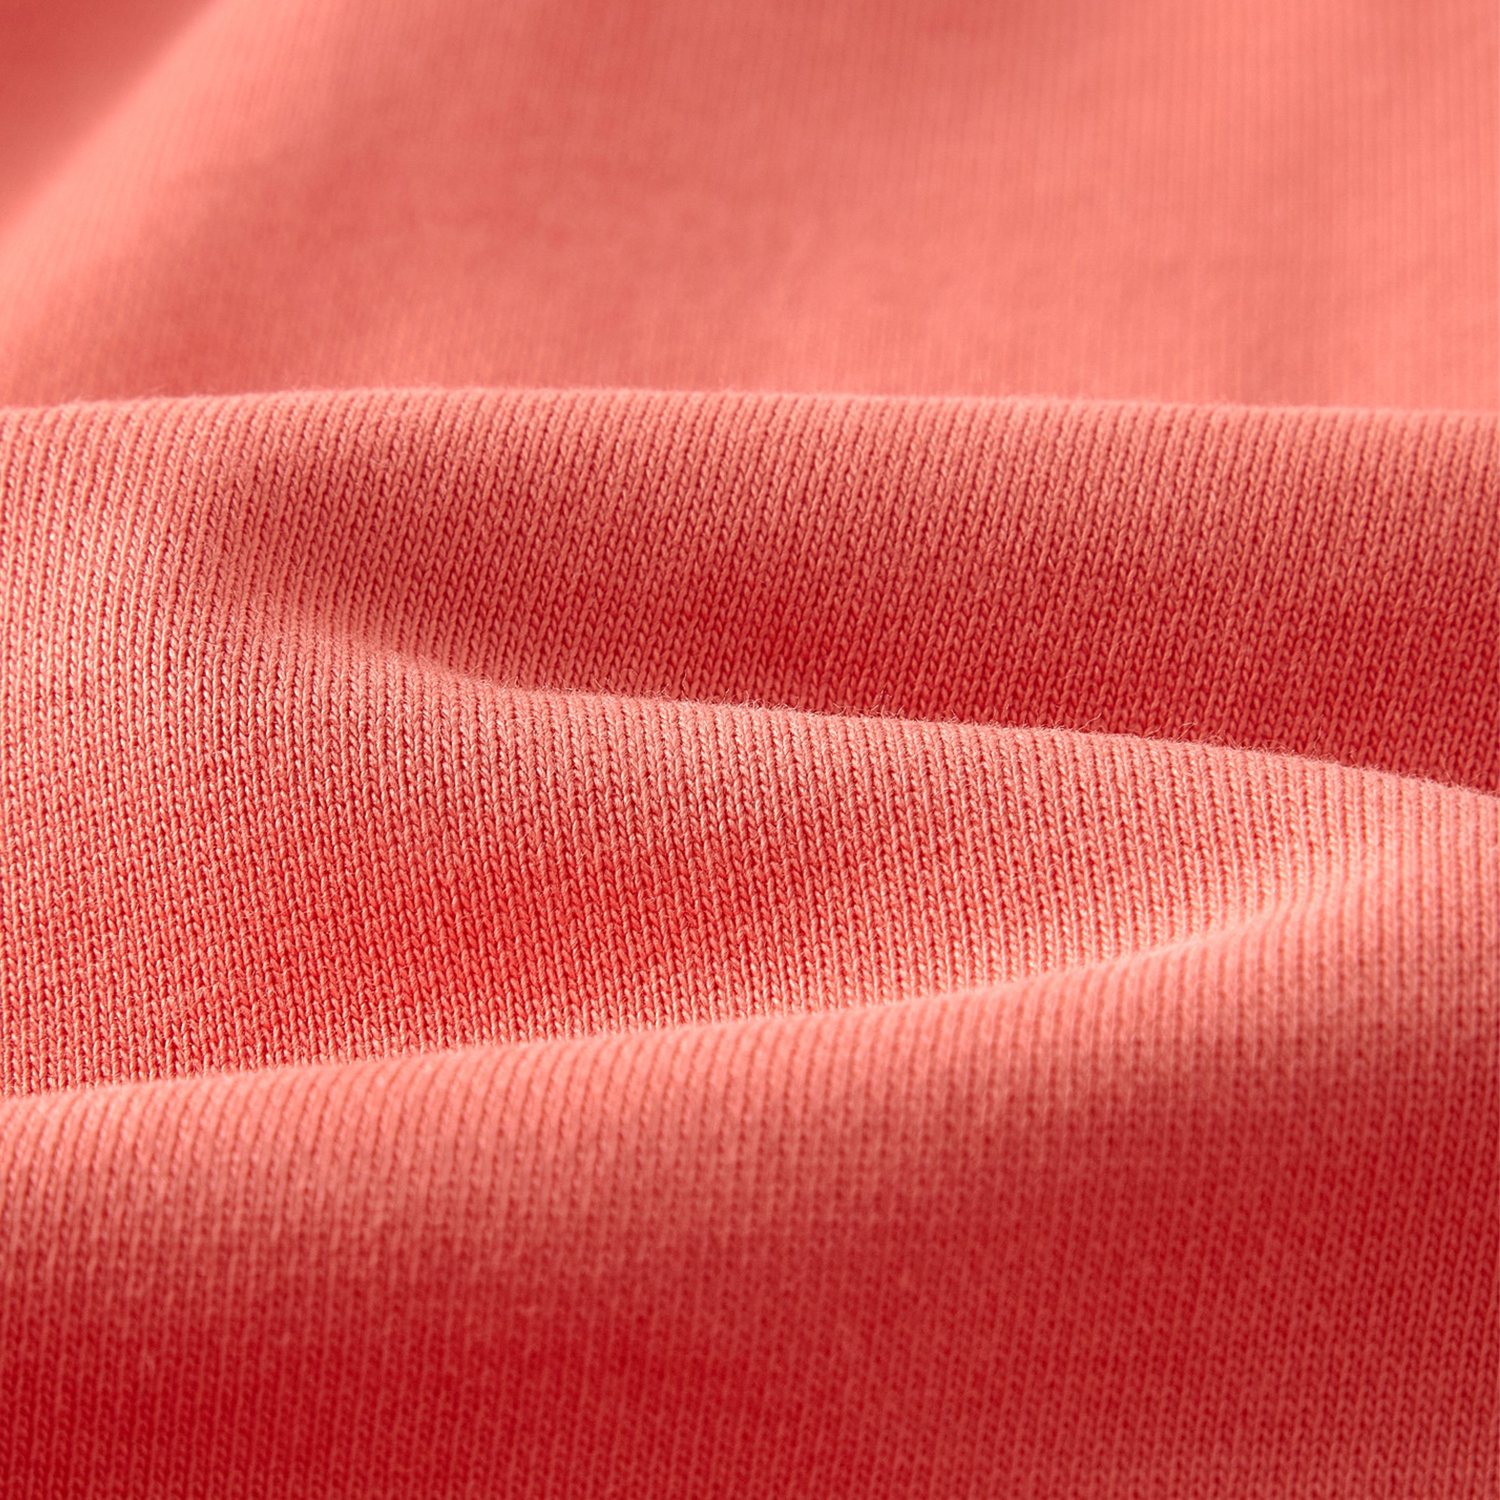 Streetwear Unisex Basic Earth Tone Loose Fit FOG 100% Cotton Shorts - Print On Demand | HugePOD-31